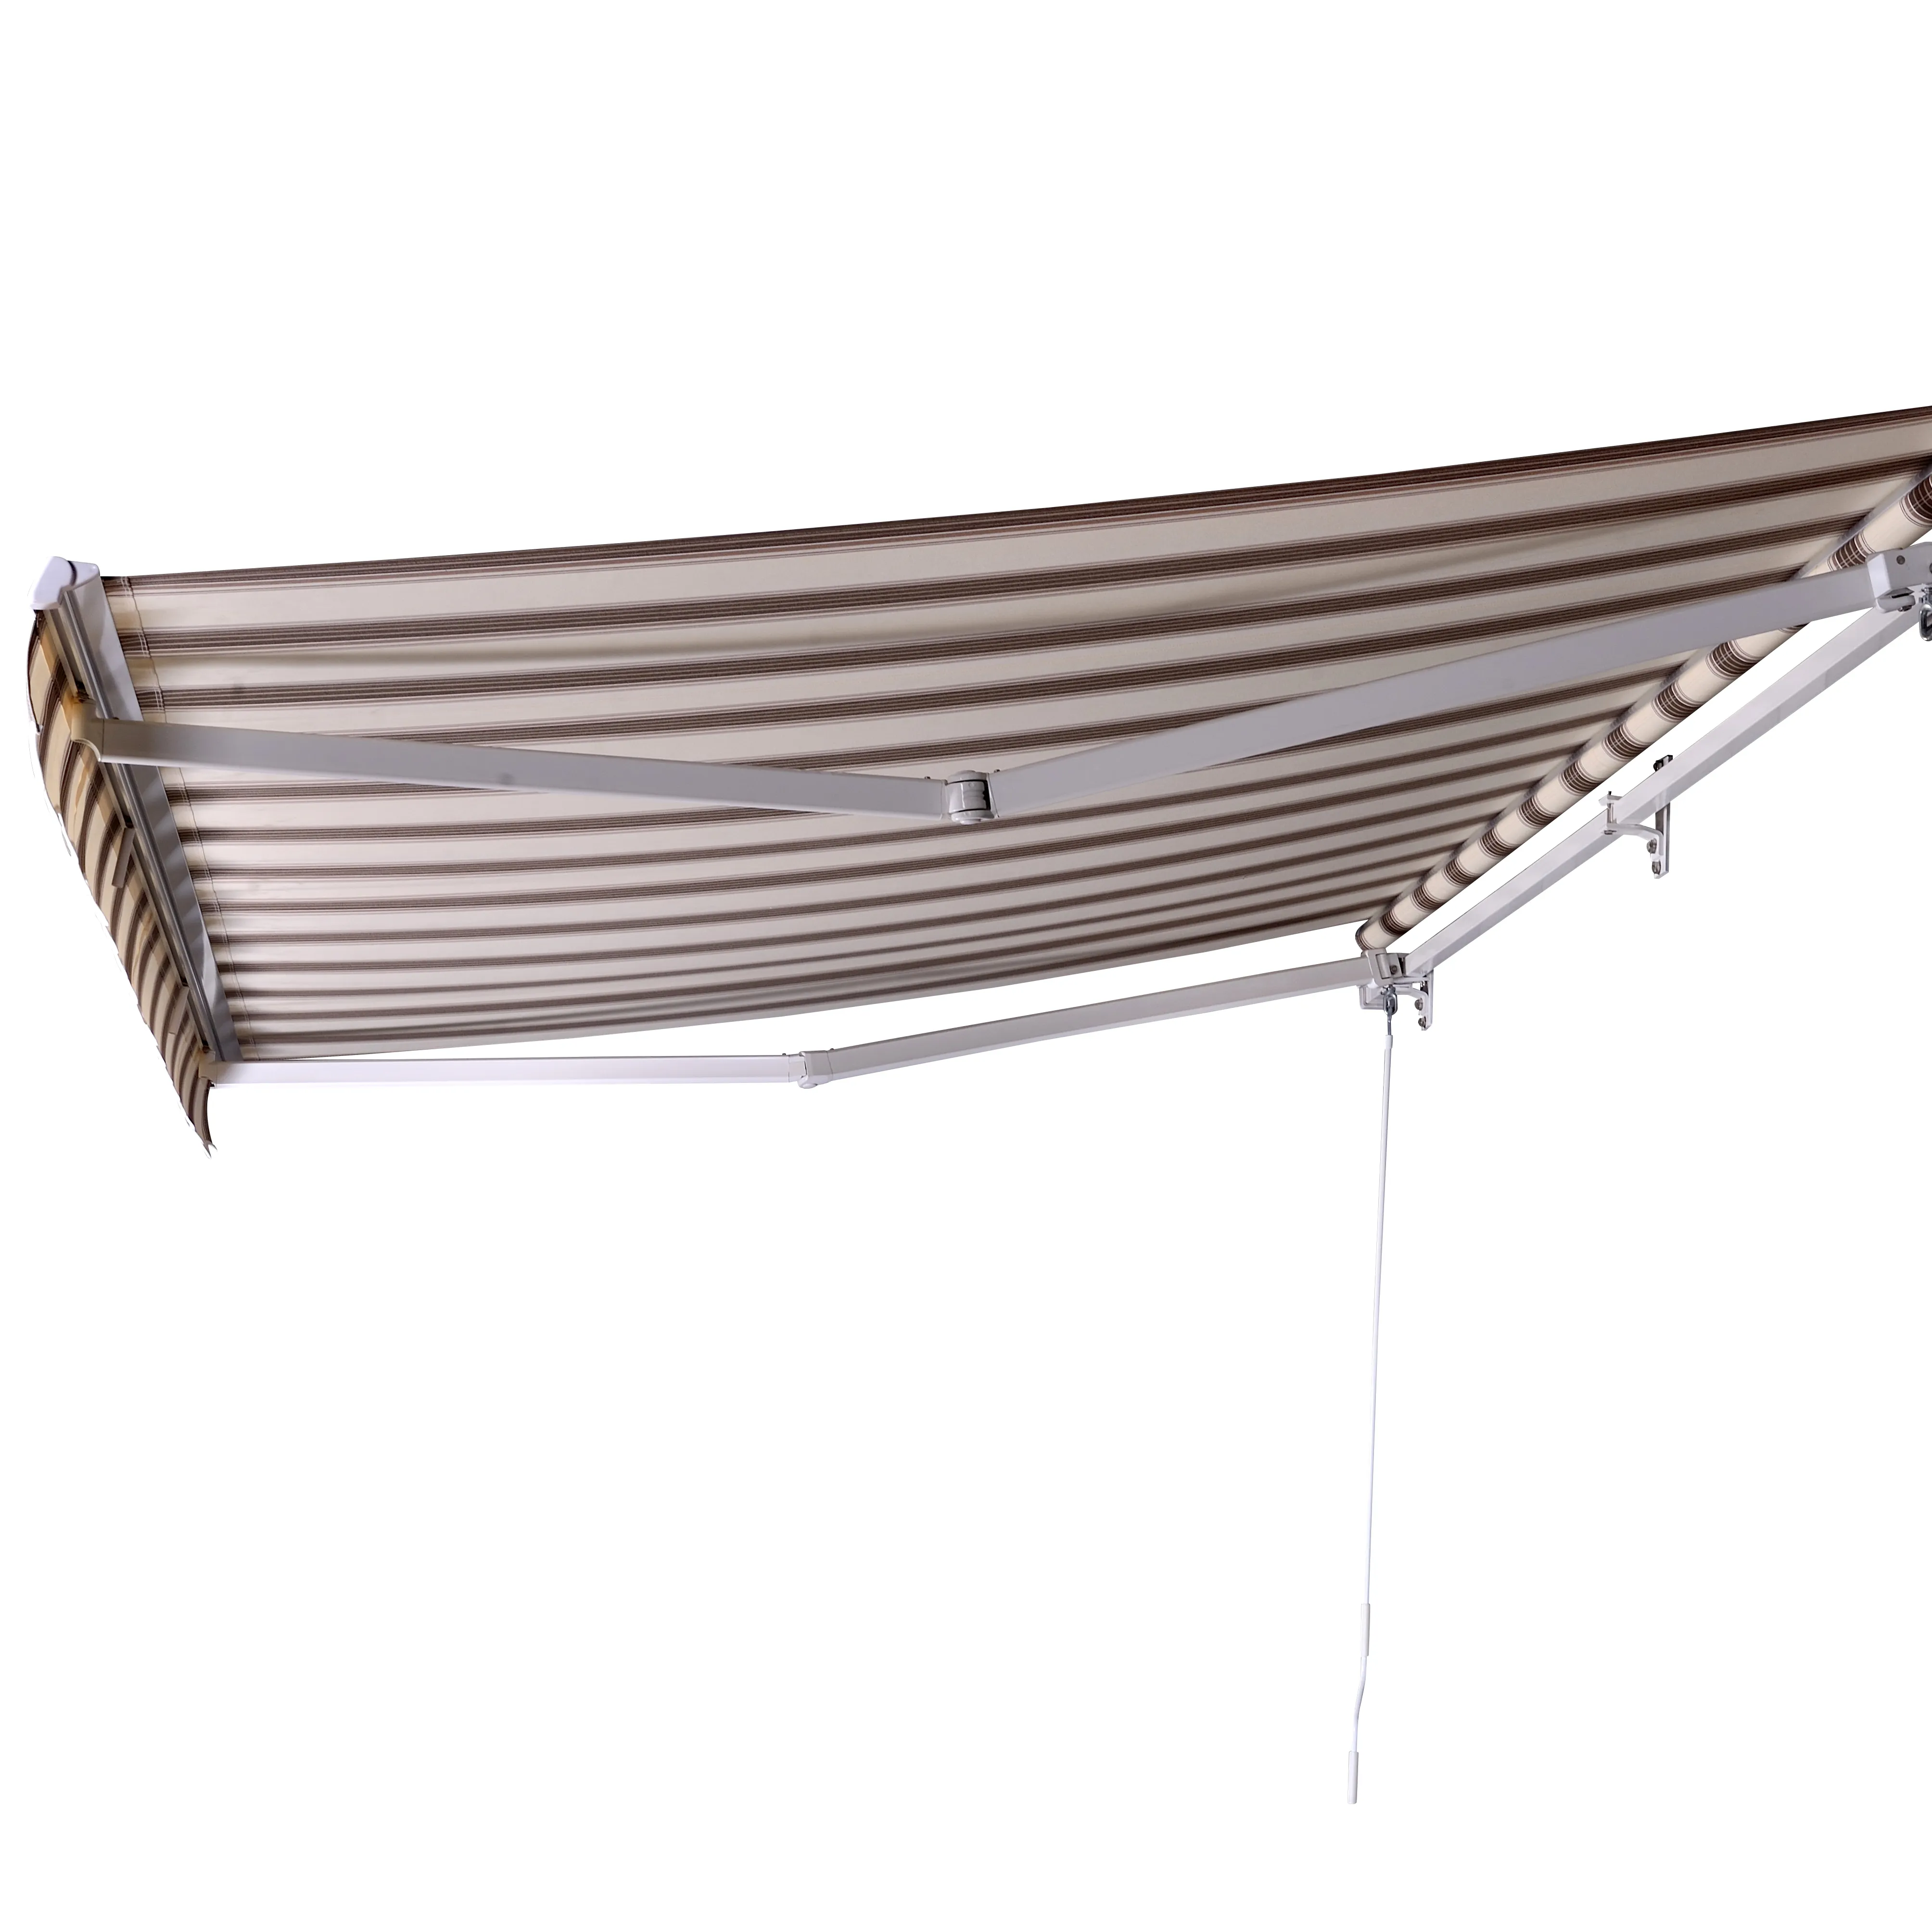 Toldo retráctil resistente a la lluvia, parasol de aleación de aluminio duradero para exteriores